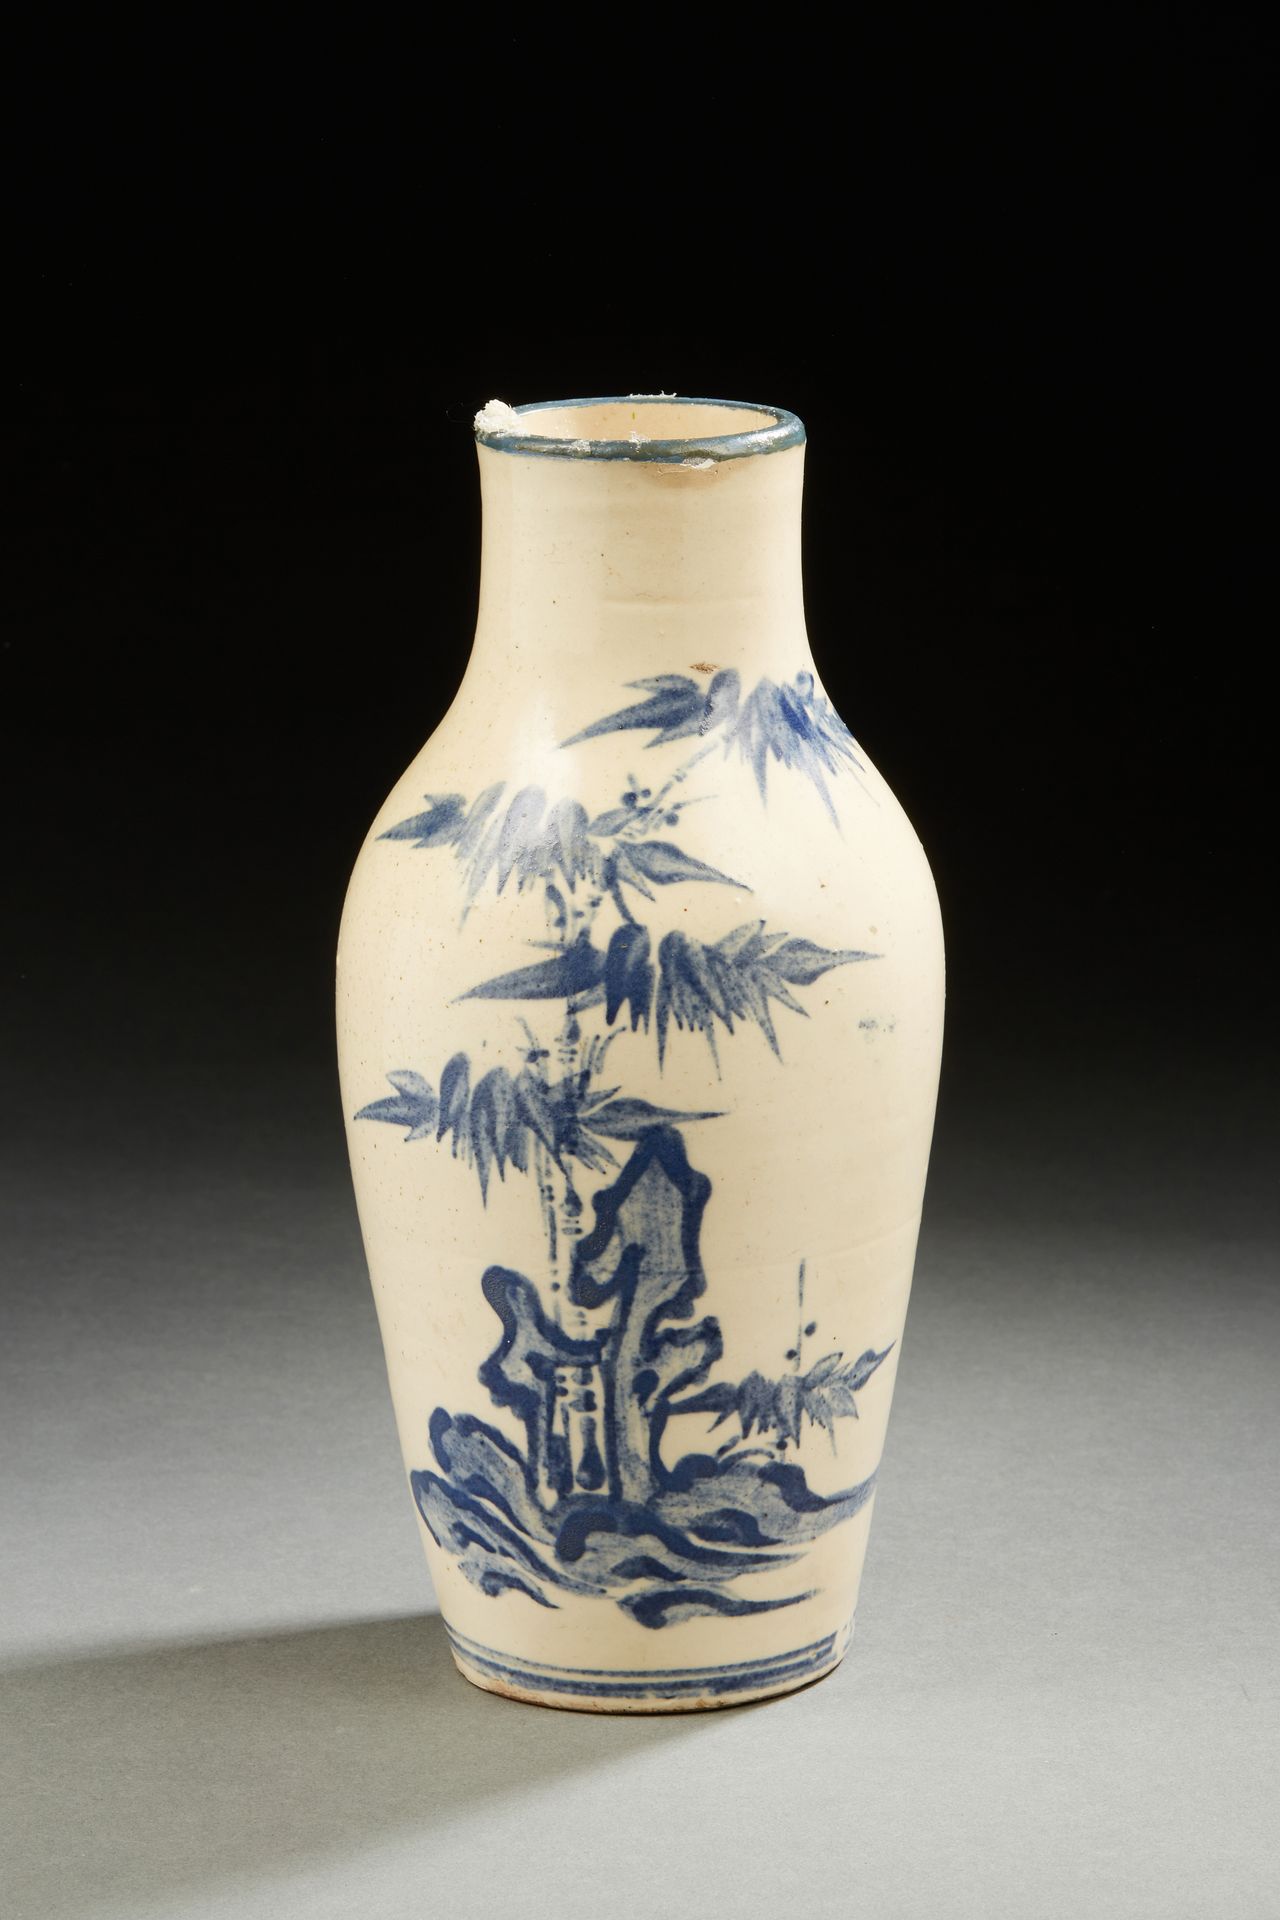 Null 中国
陶瓷花瓶，用蓝色的石头和竹子作装饰。 
20世纪。
H.22厘米。